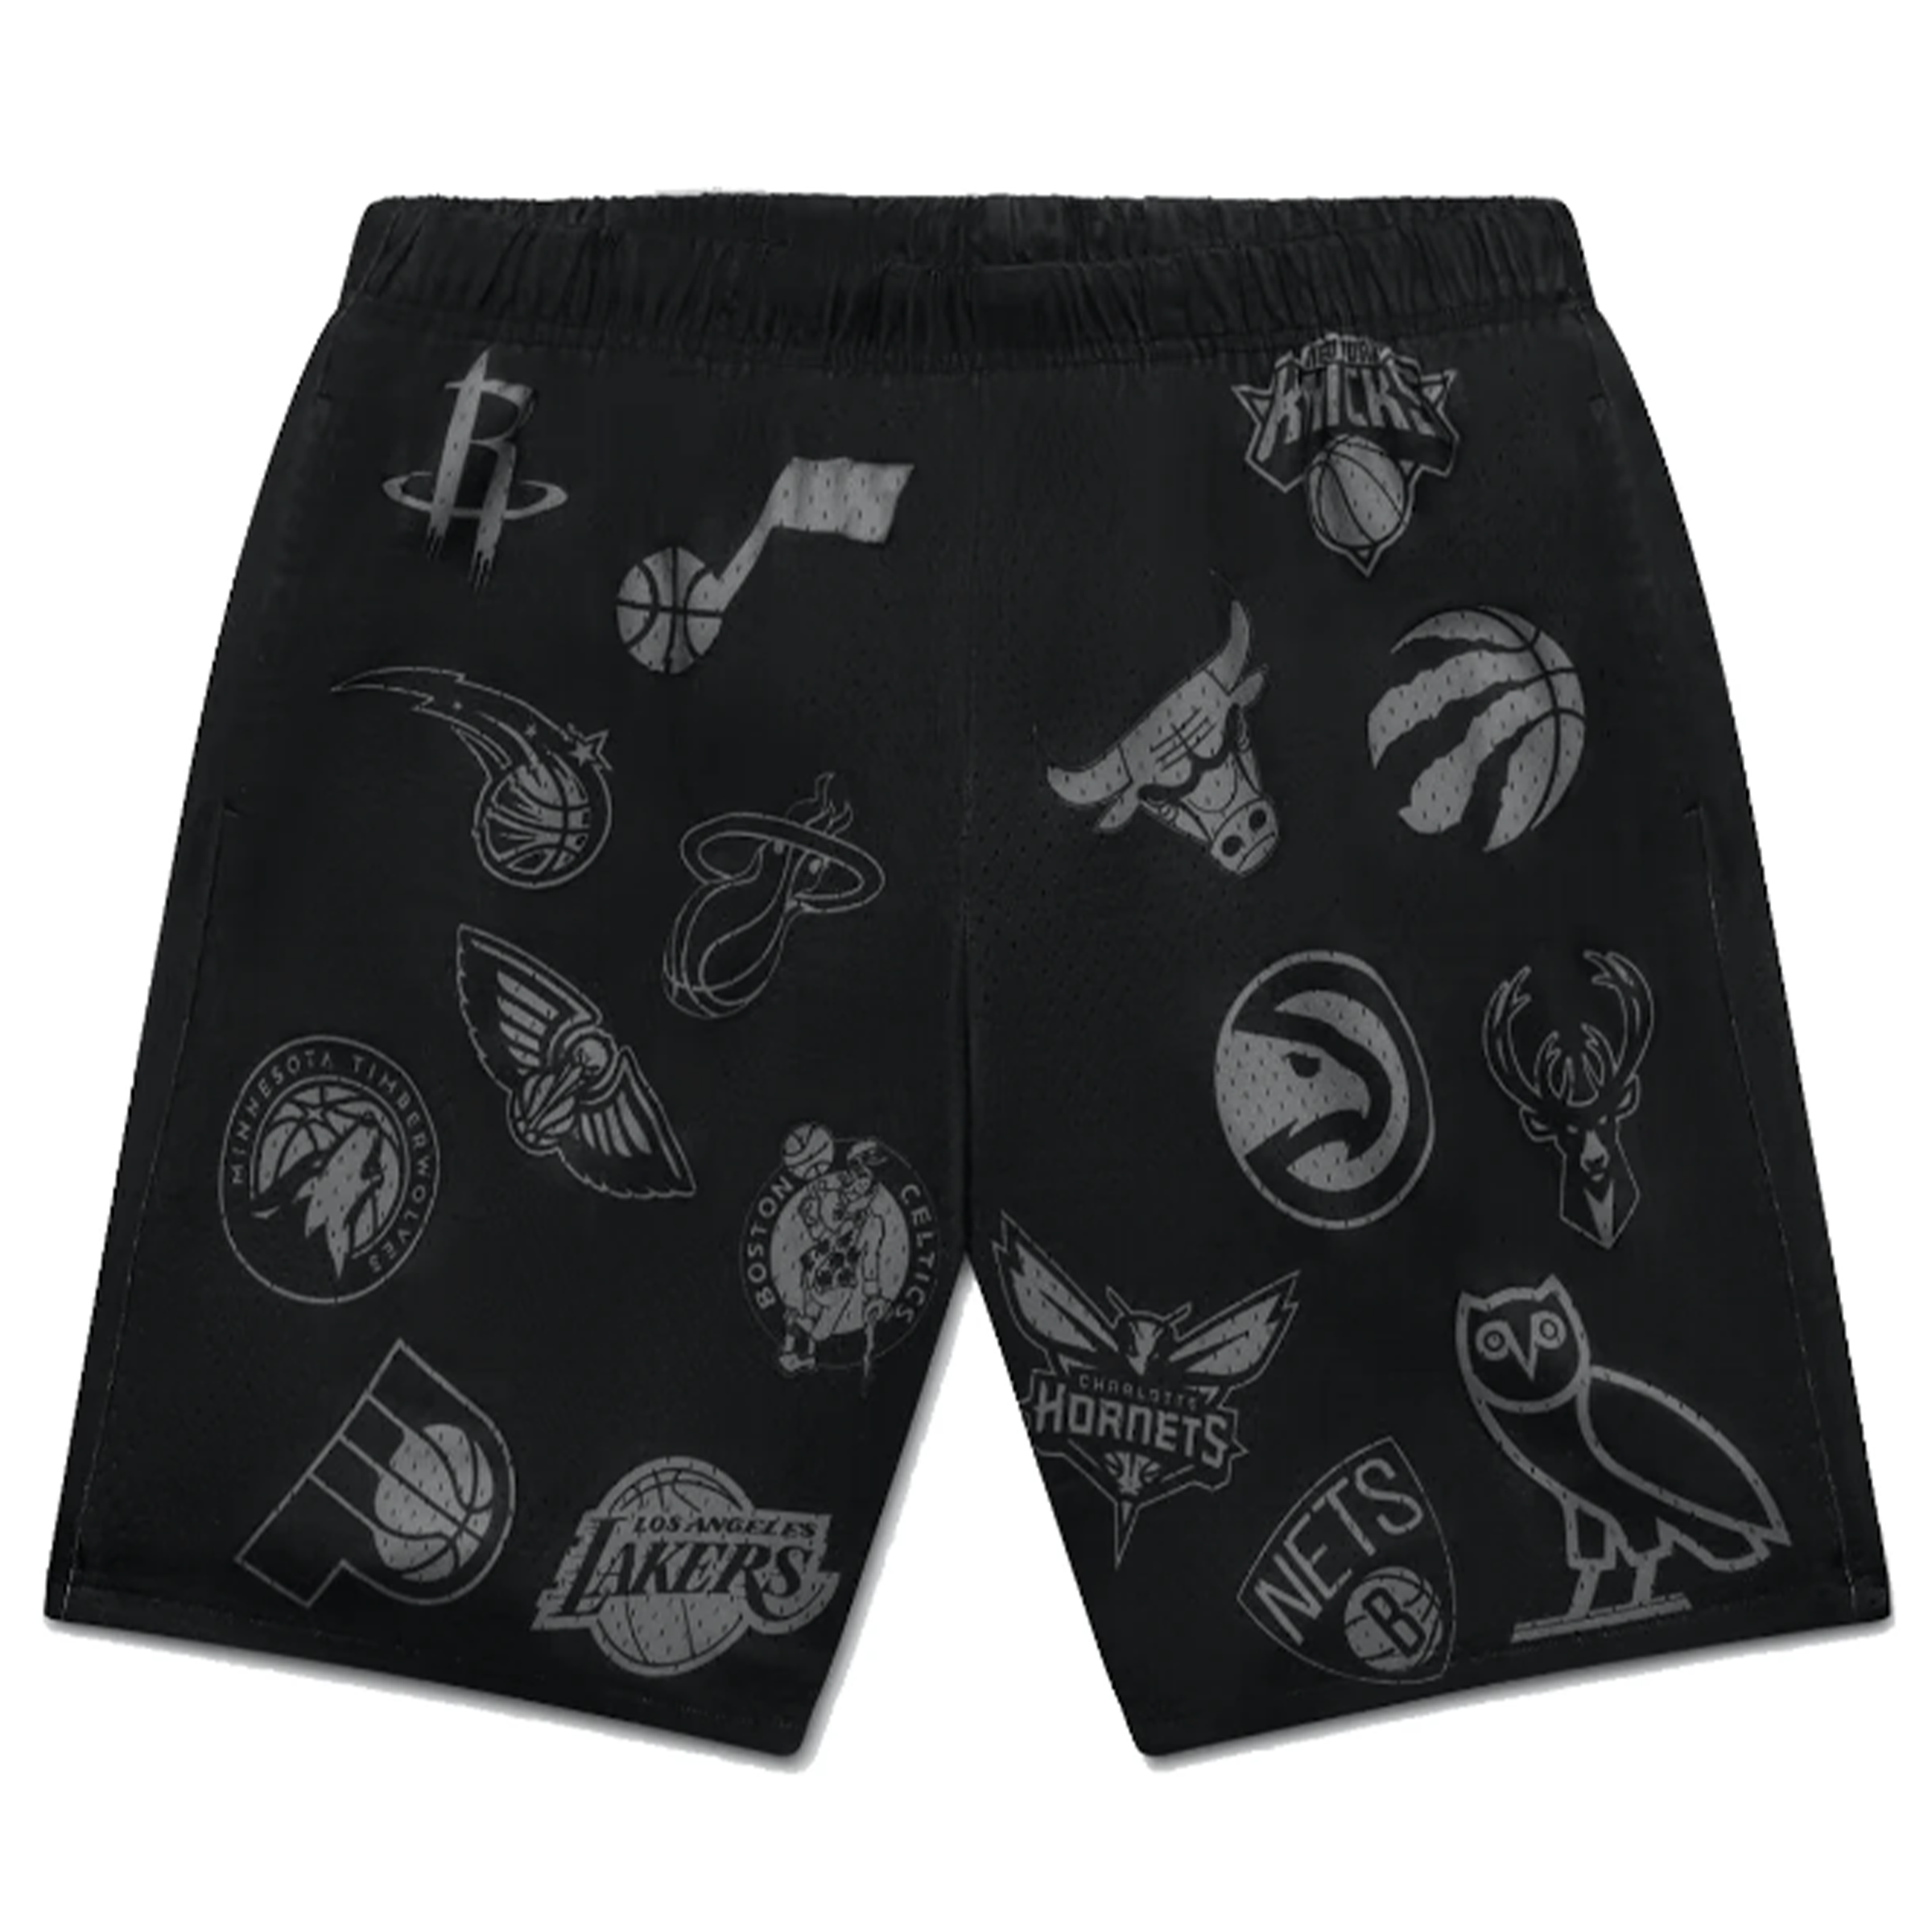 OVO x NBA "Team Icons" Basketball Shorts